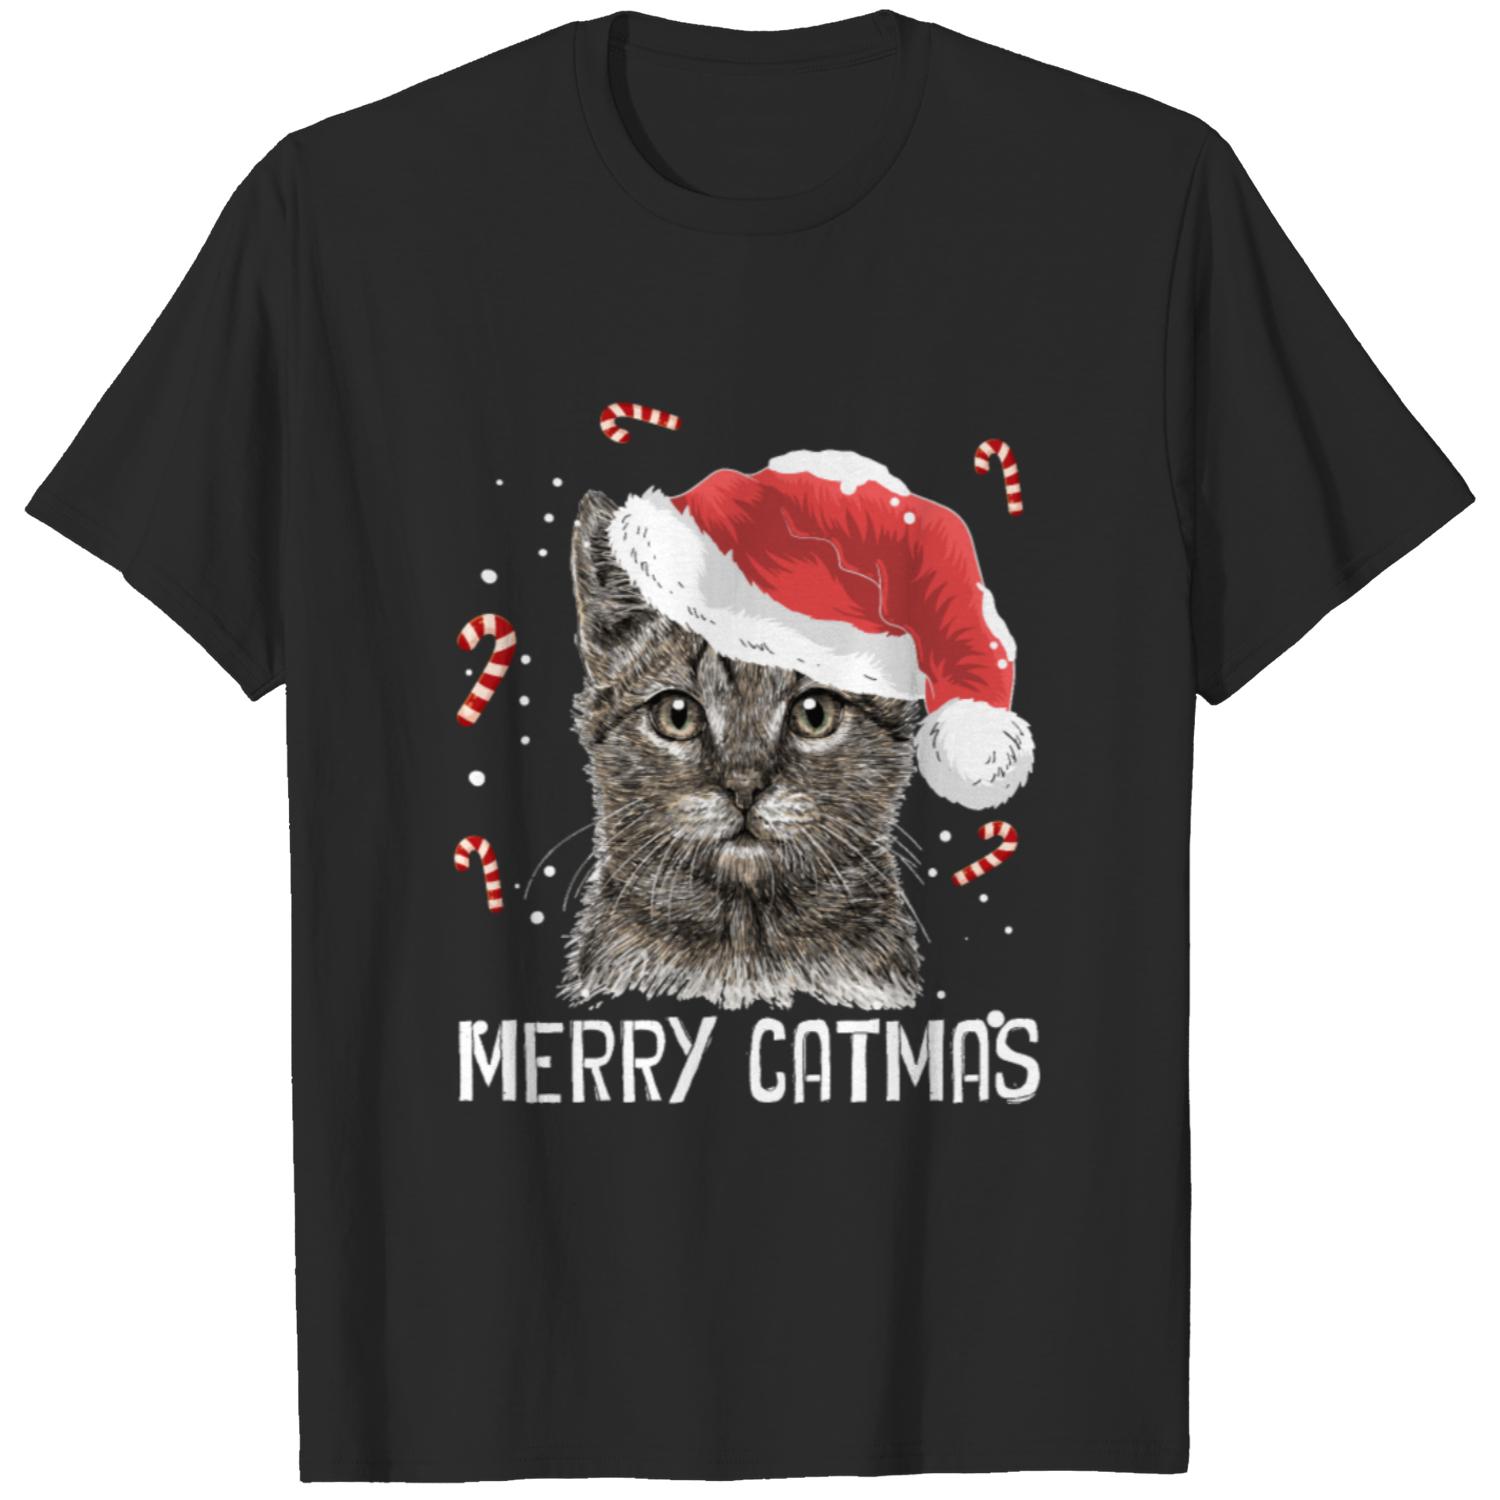 Merry Catmas Cats Christmas T-shirt